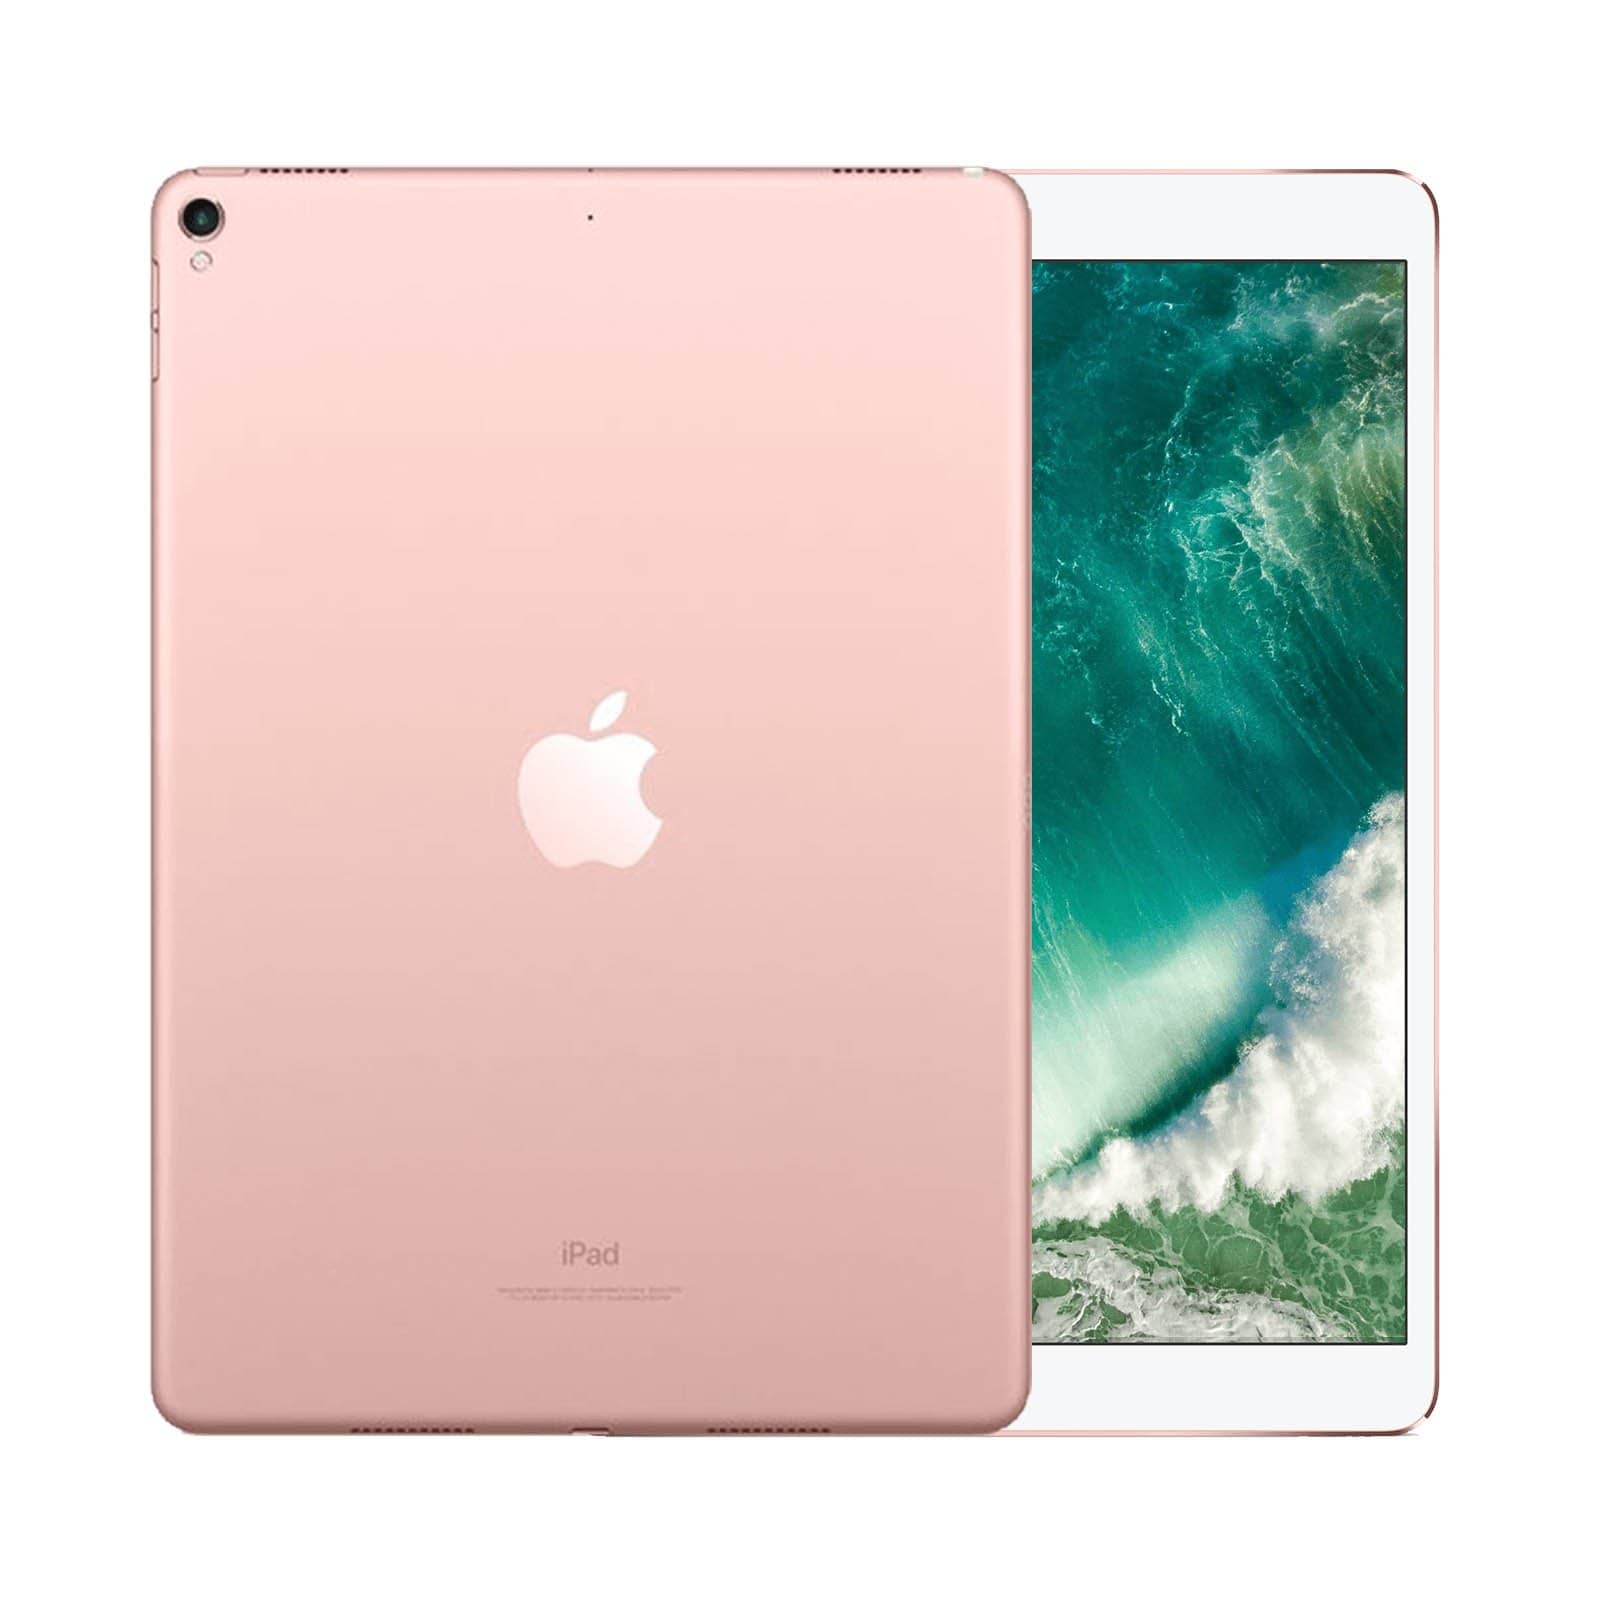 iPad Pro 10.5 Inch 256GB Rose Gold Good - WiFi 256GB Rose Gold Good